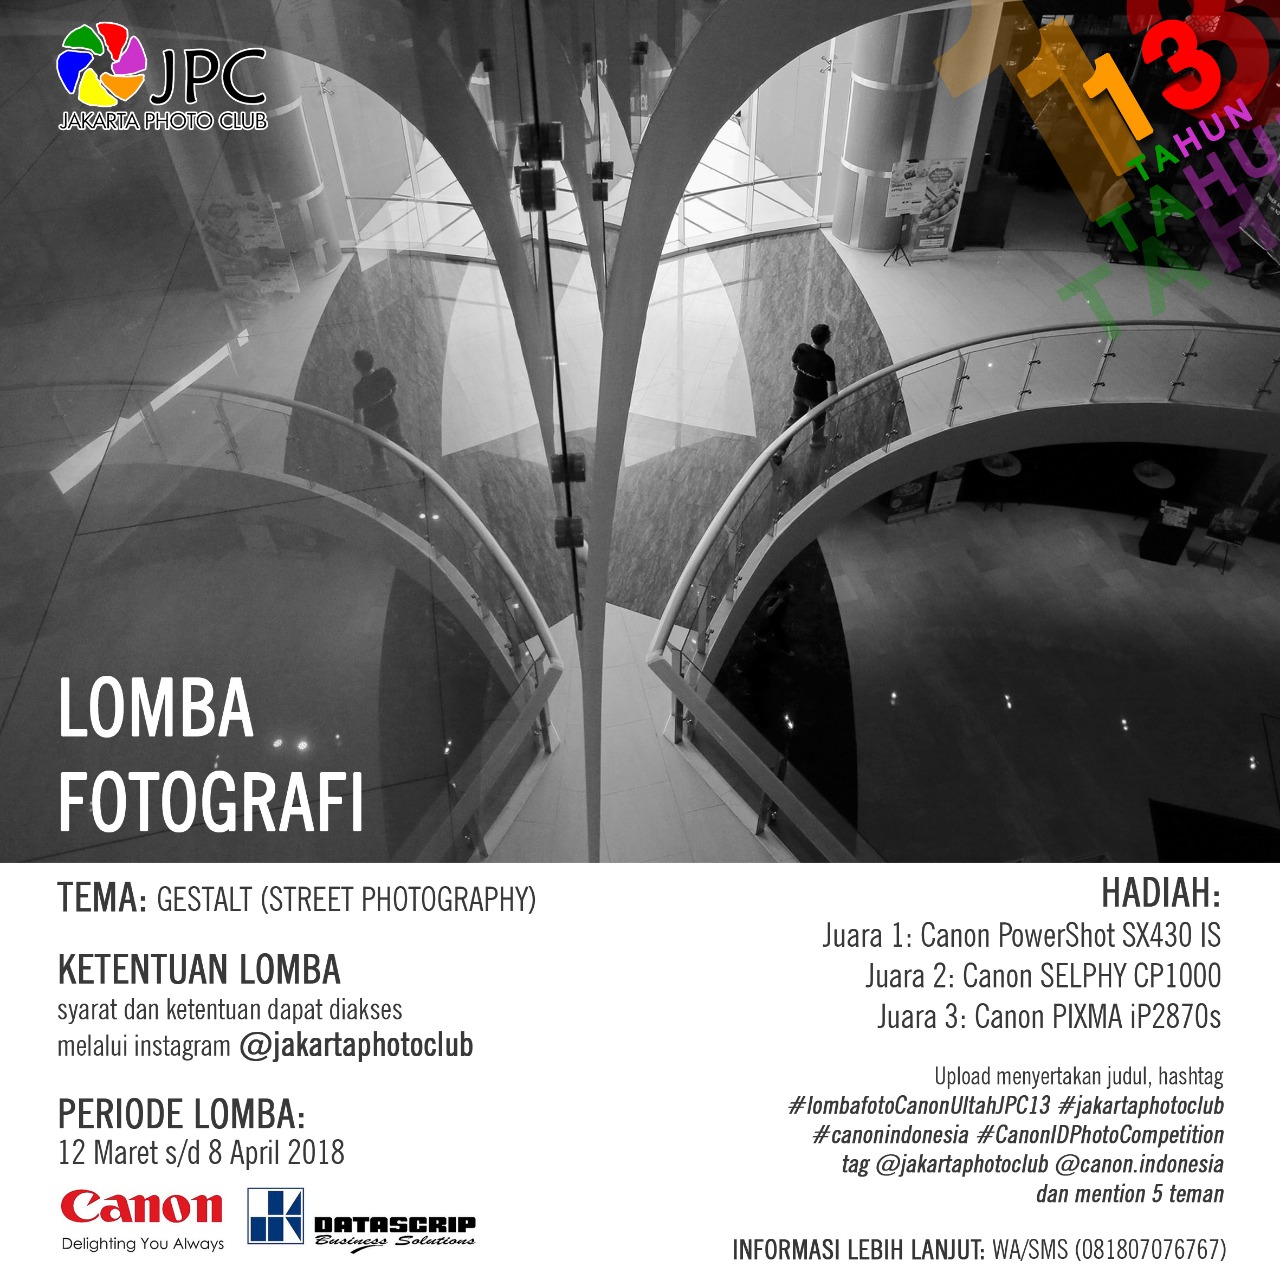 Jakata school of photography info lomba foto